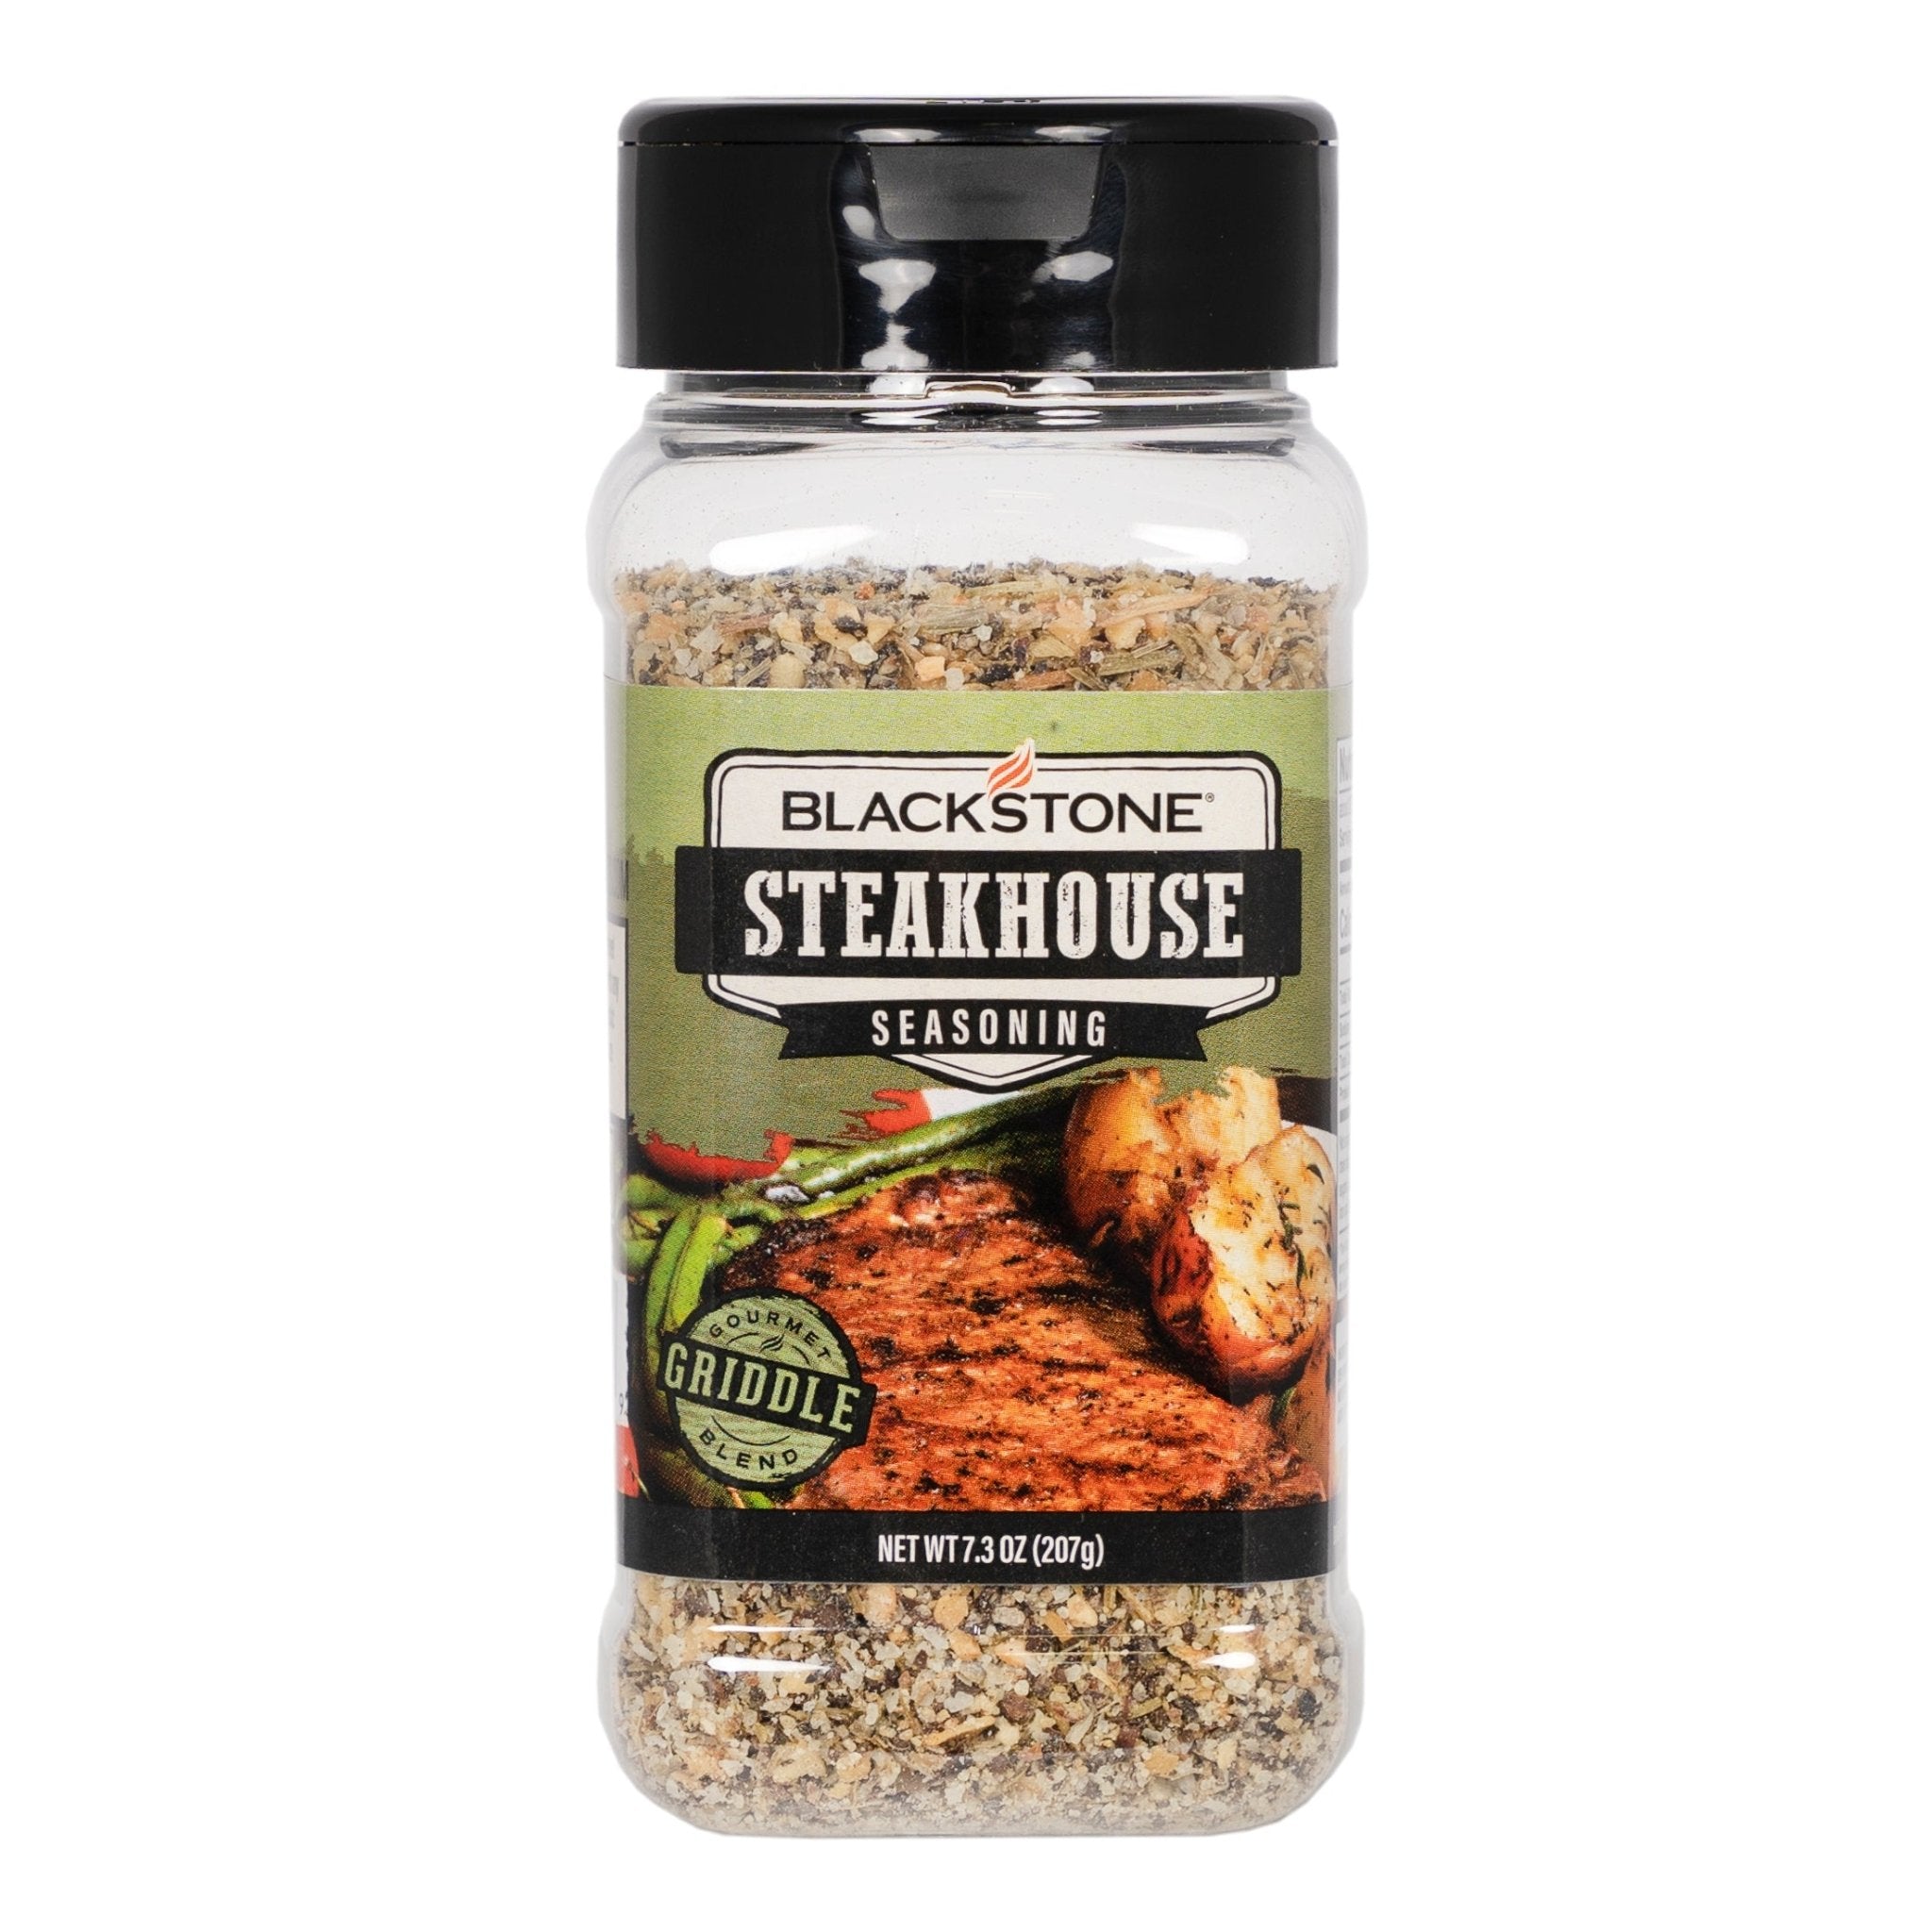 Blackstone Steakhouse Seasoning Gourmet Griddle Blend, 7.3 oz.